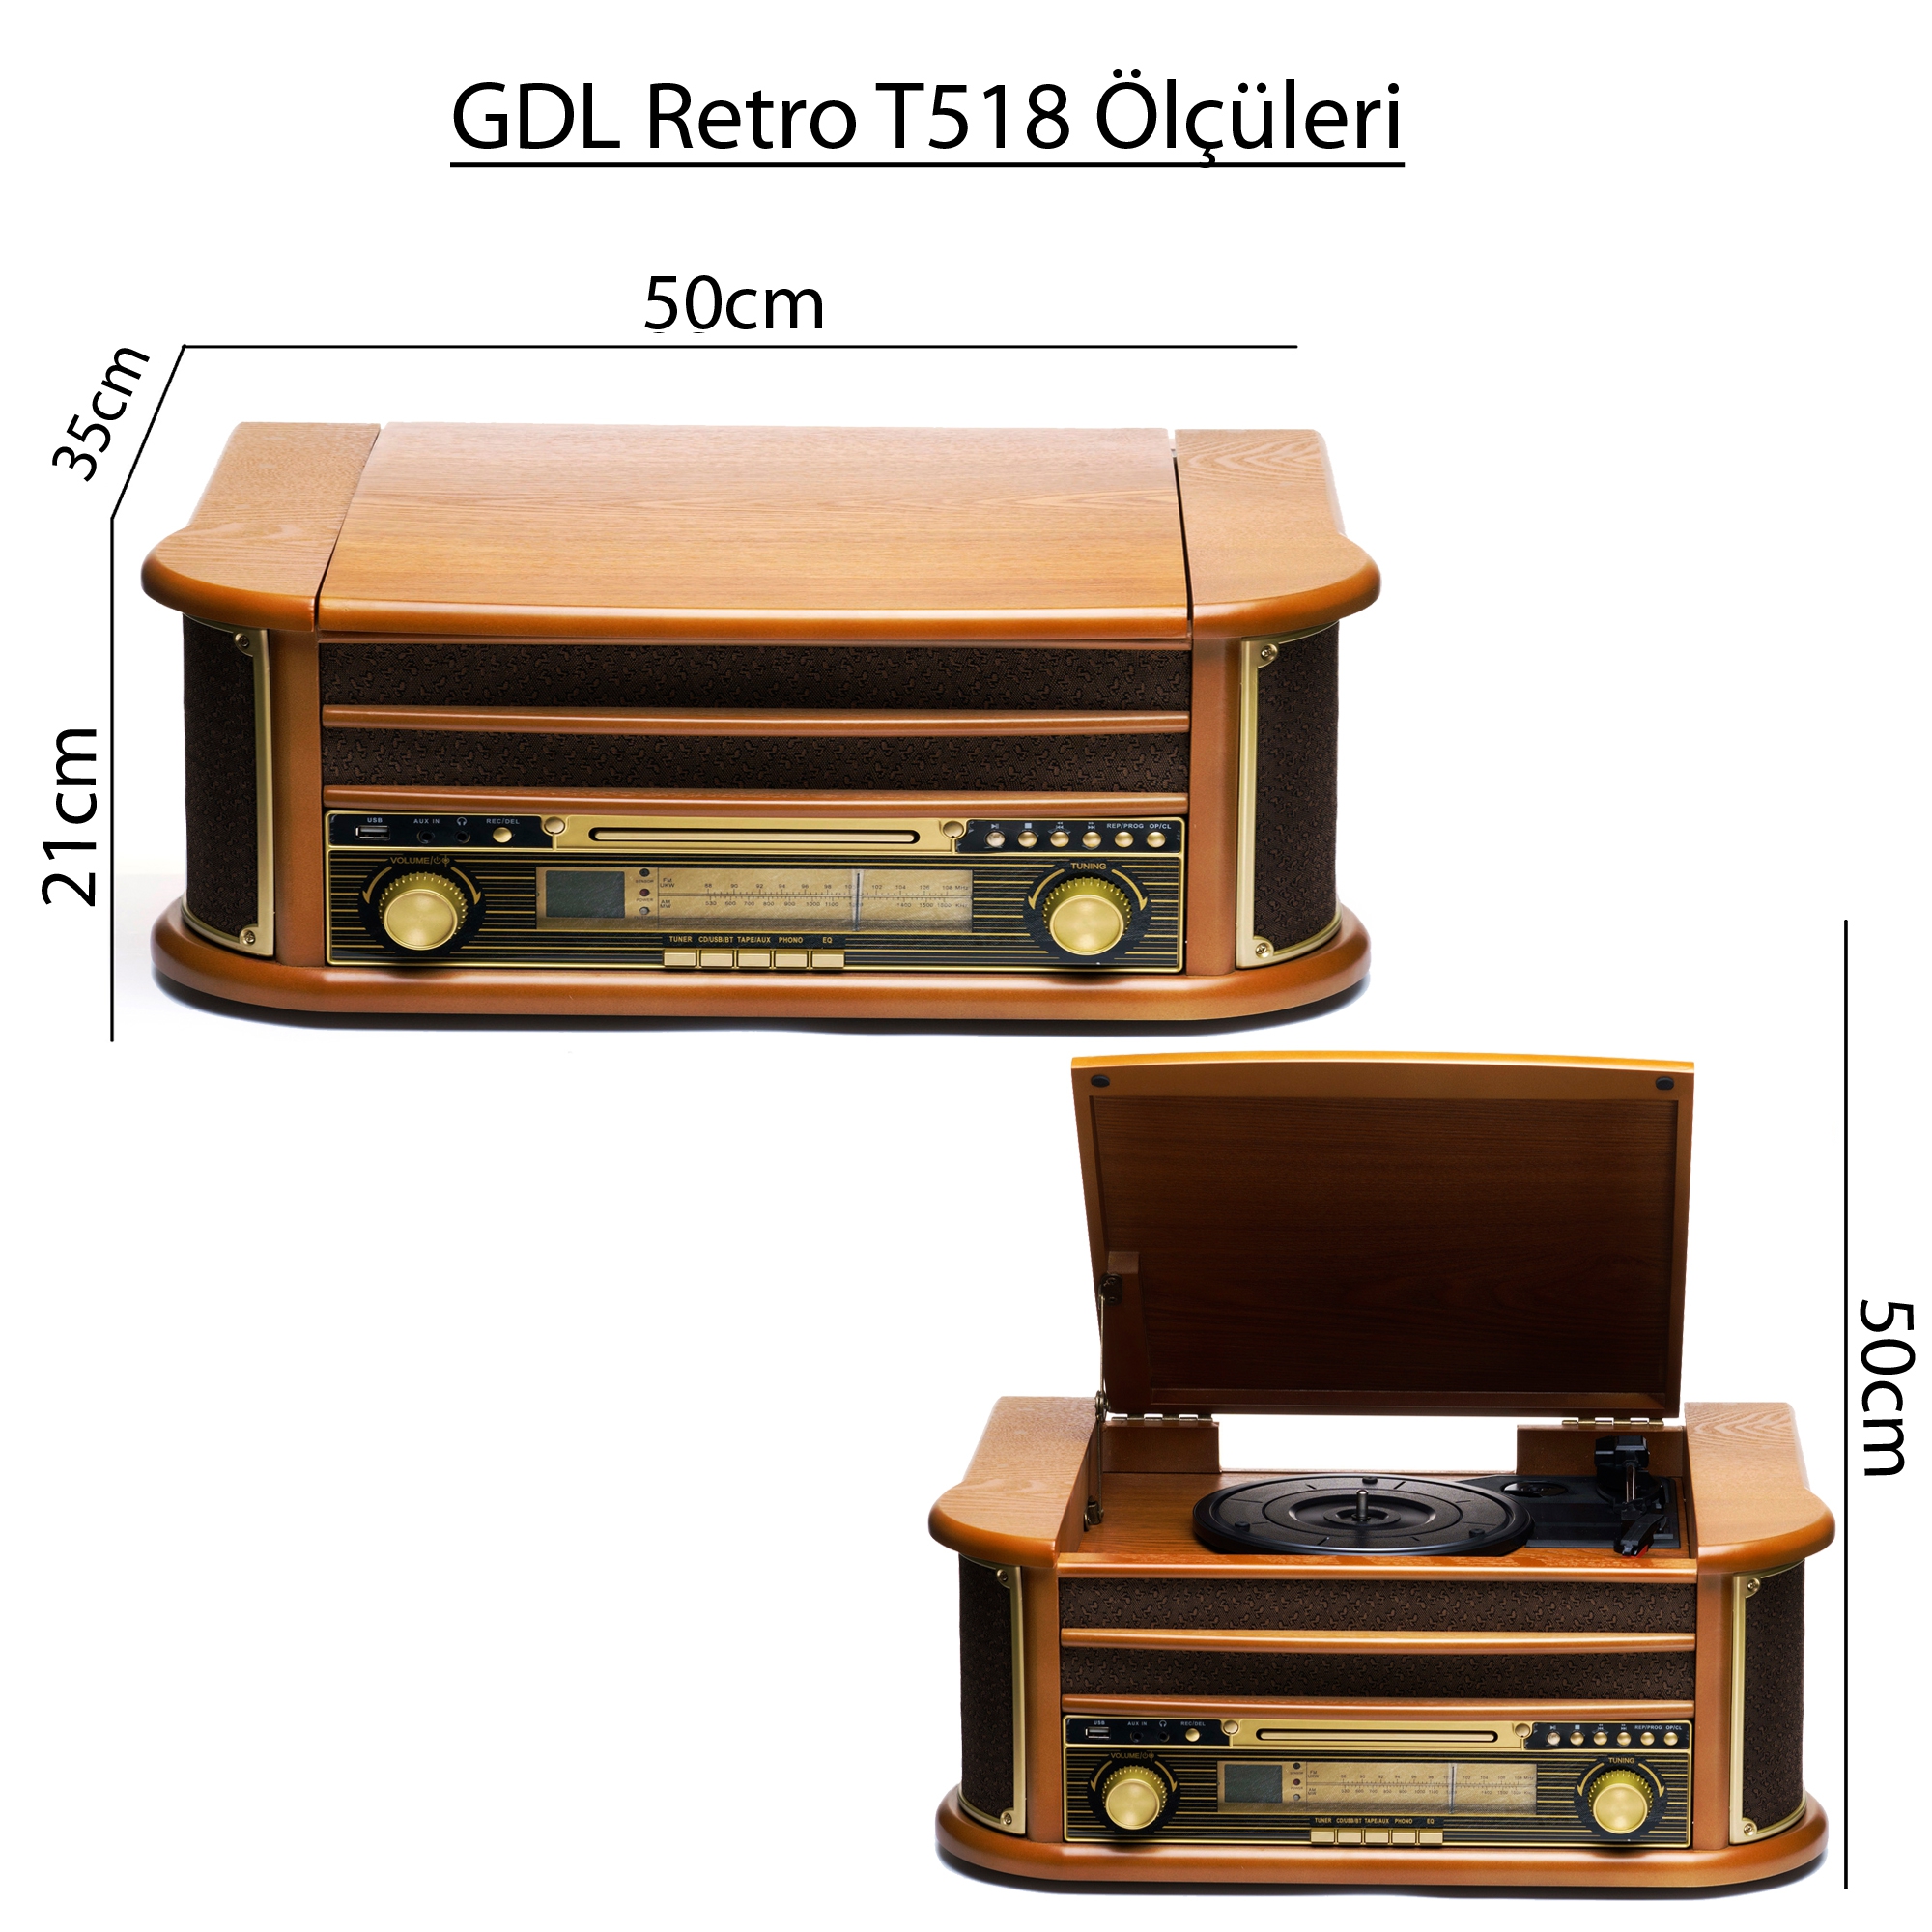 GDL Retro T518 Pikap, Radyo, CD, Kaset , USB Çalar